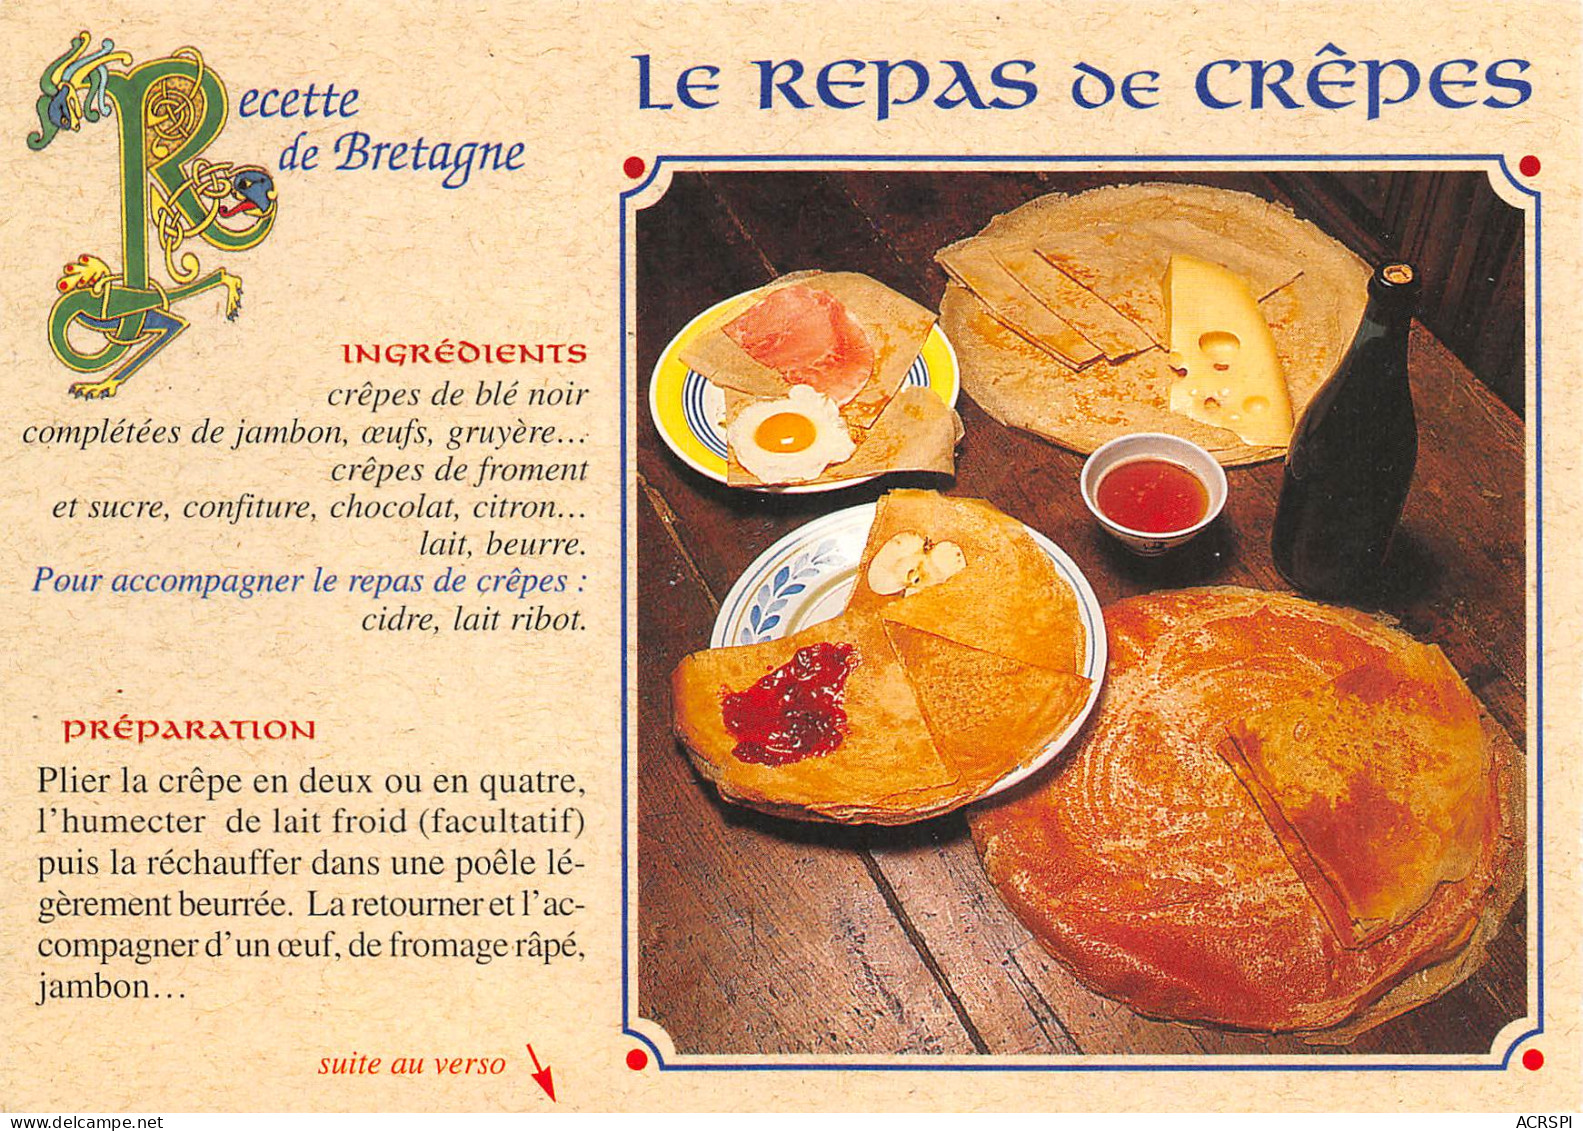 Recette Du Repas De Crêpes Bretonne Chateaulin   N° 54 \MK3029 - Recepten (kook)